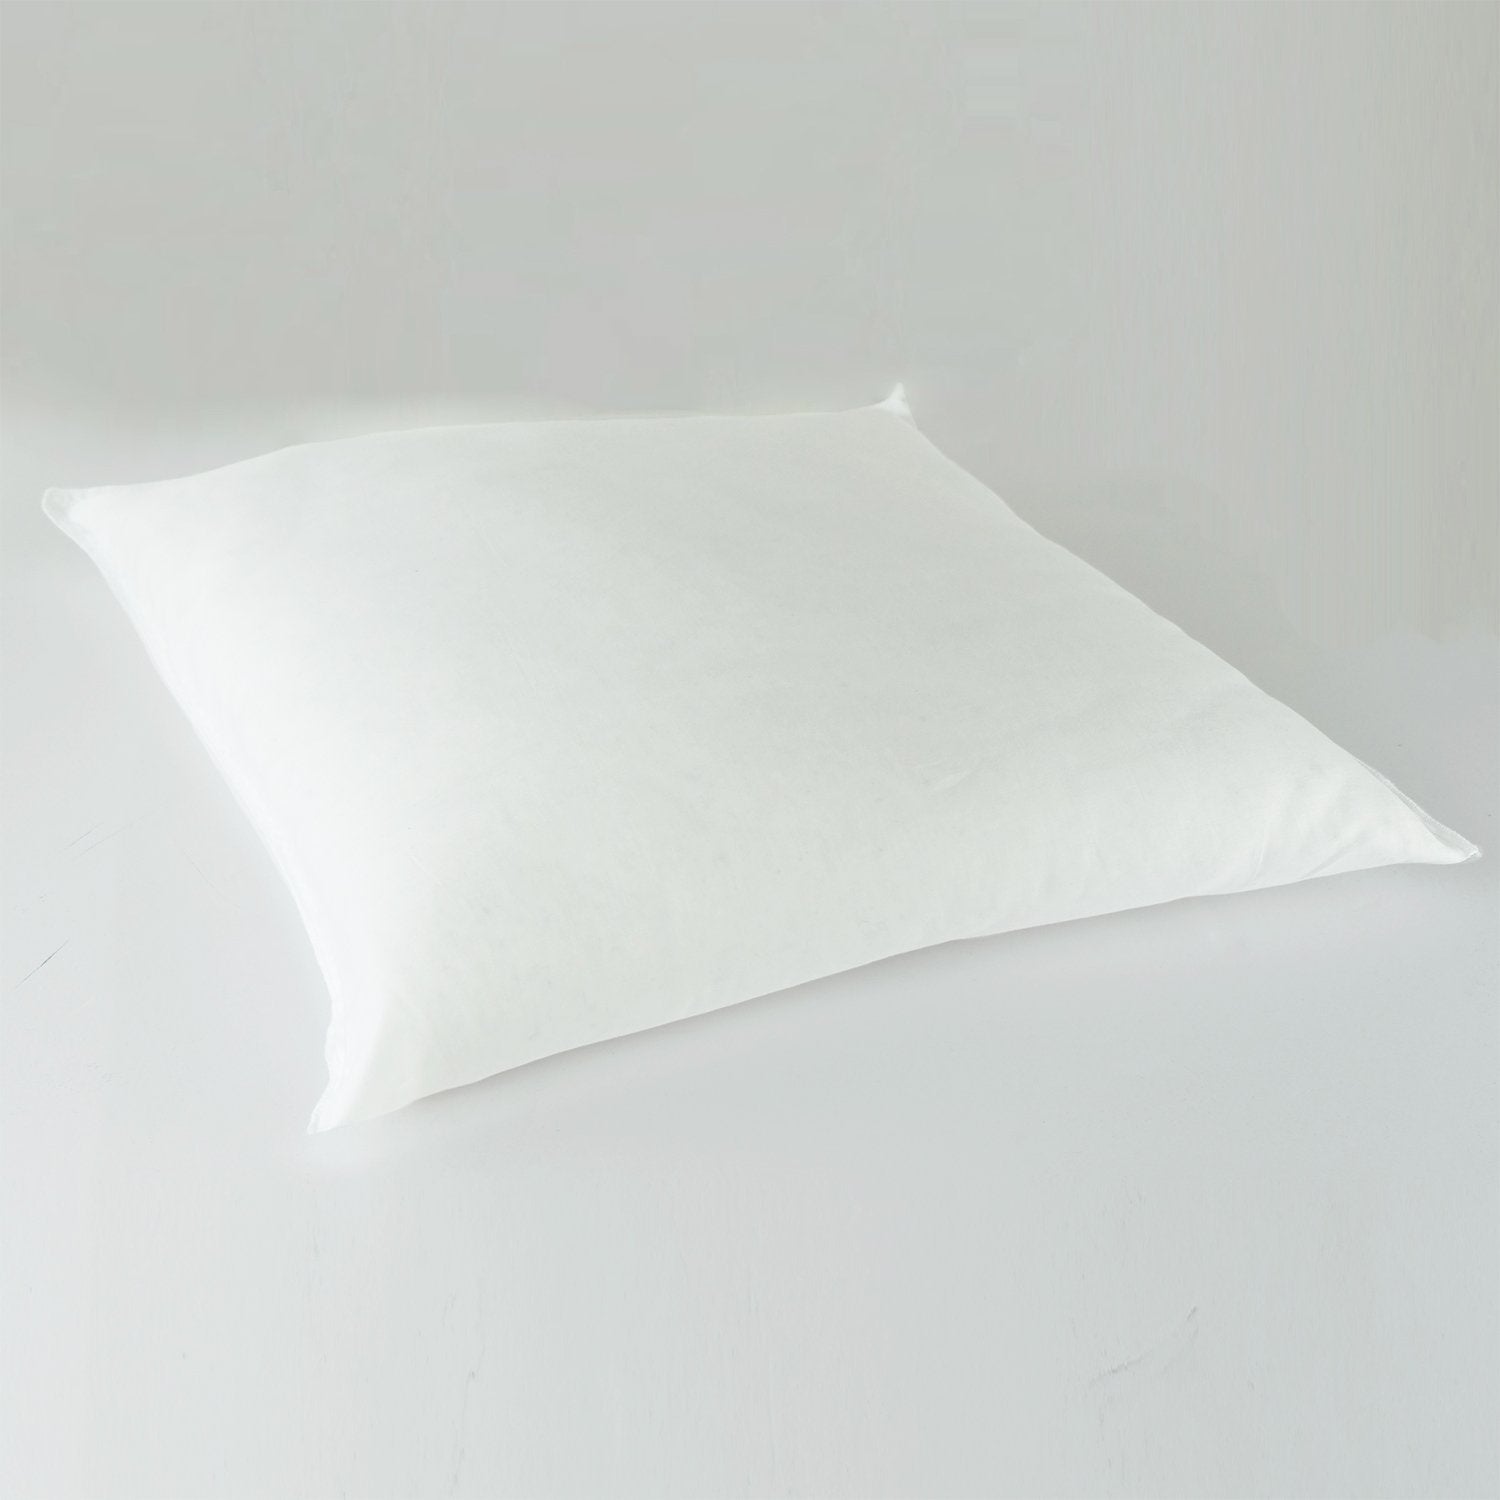 J-Life Seikai Ha Green Zabuton Floor Pillow_Pillows & Shams_Zabuton Floor Pillows_100% Cotton_Reversible_Handmade